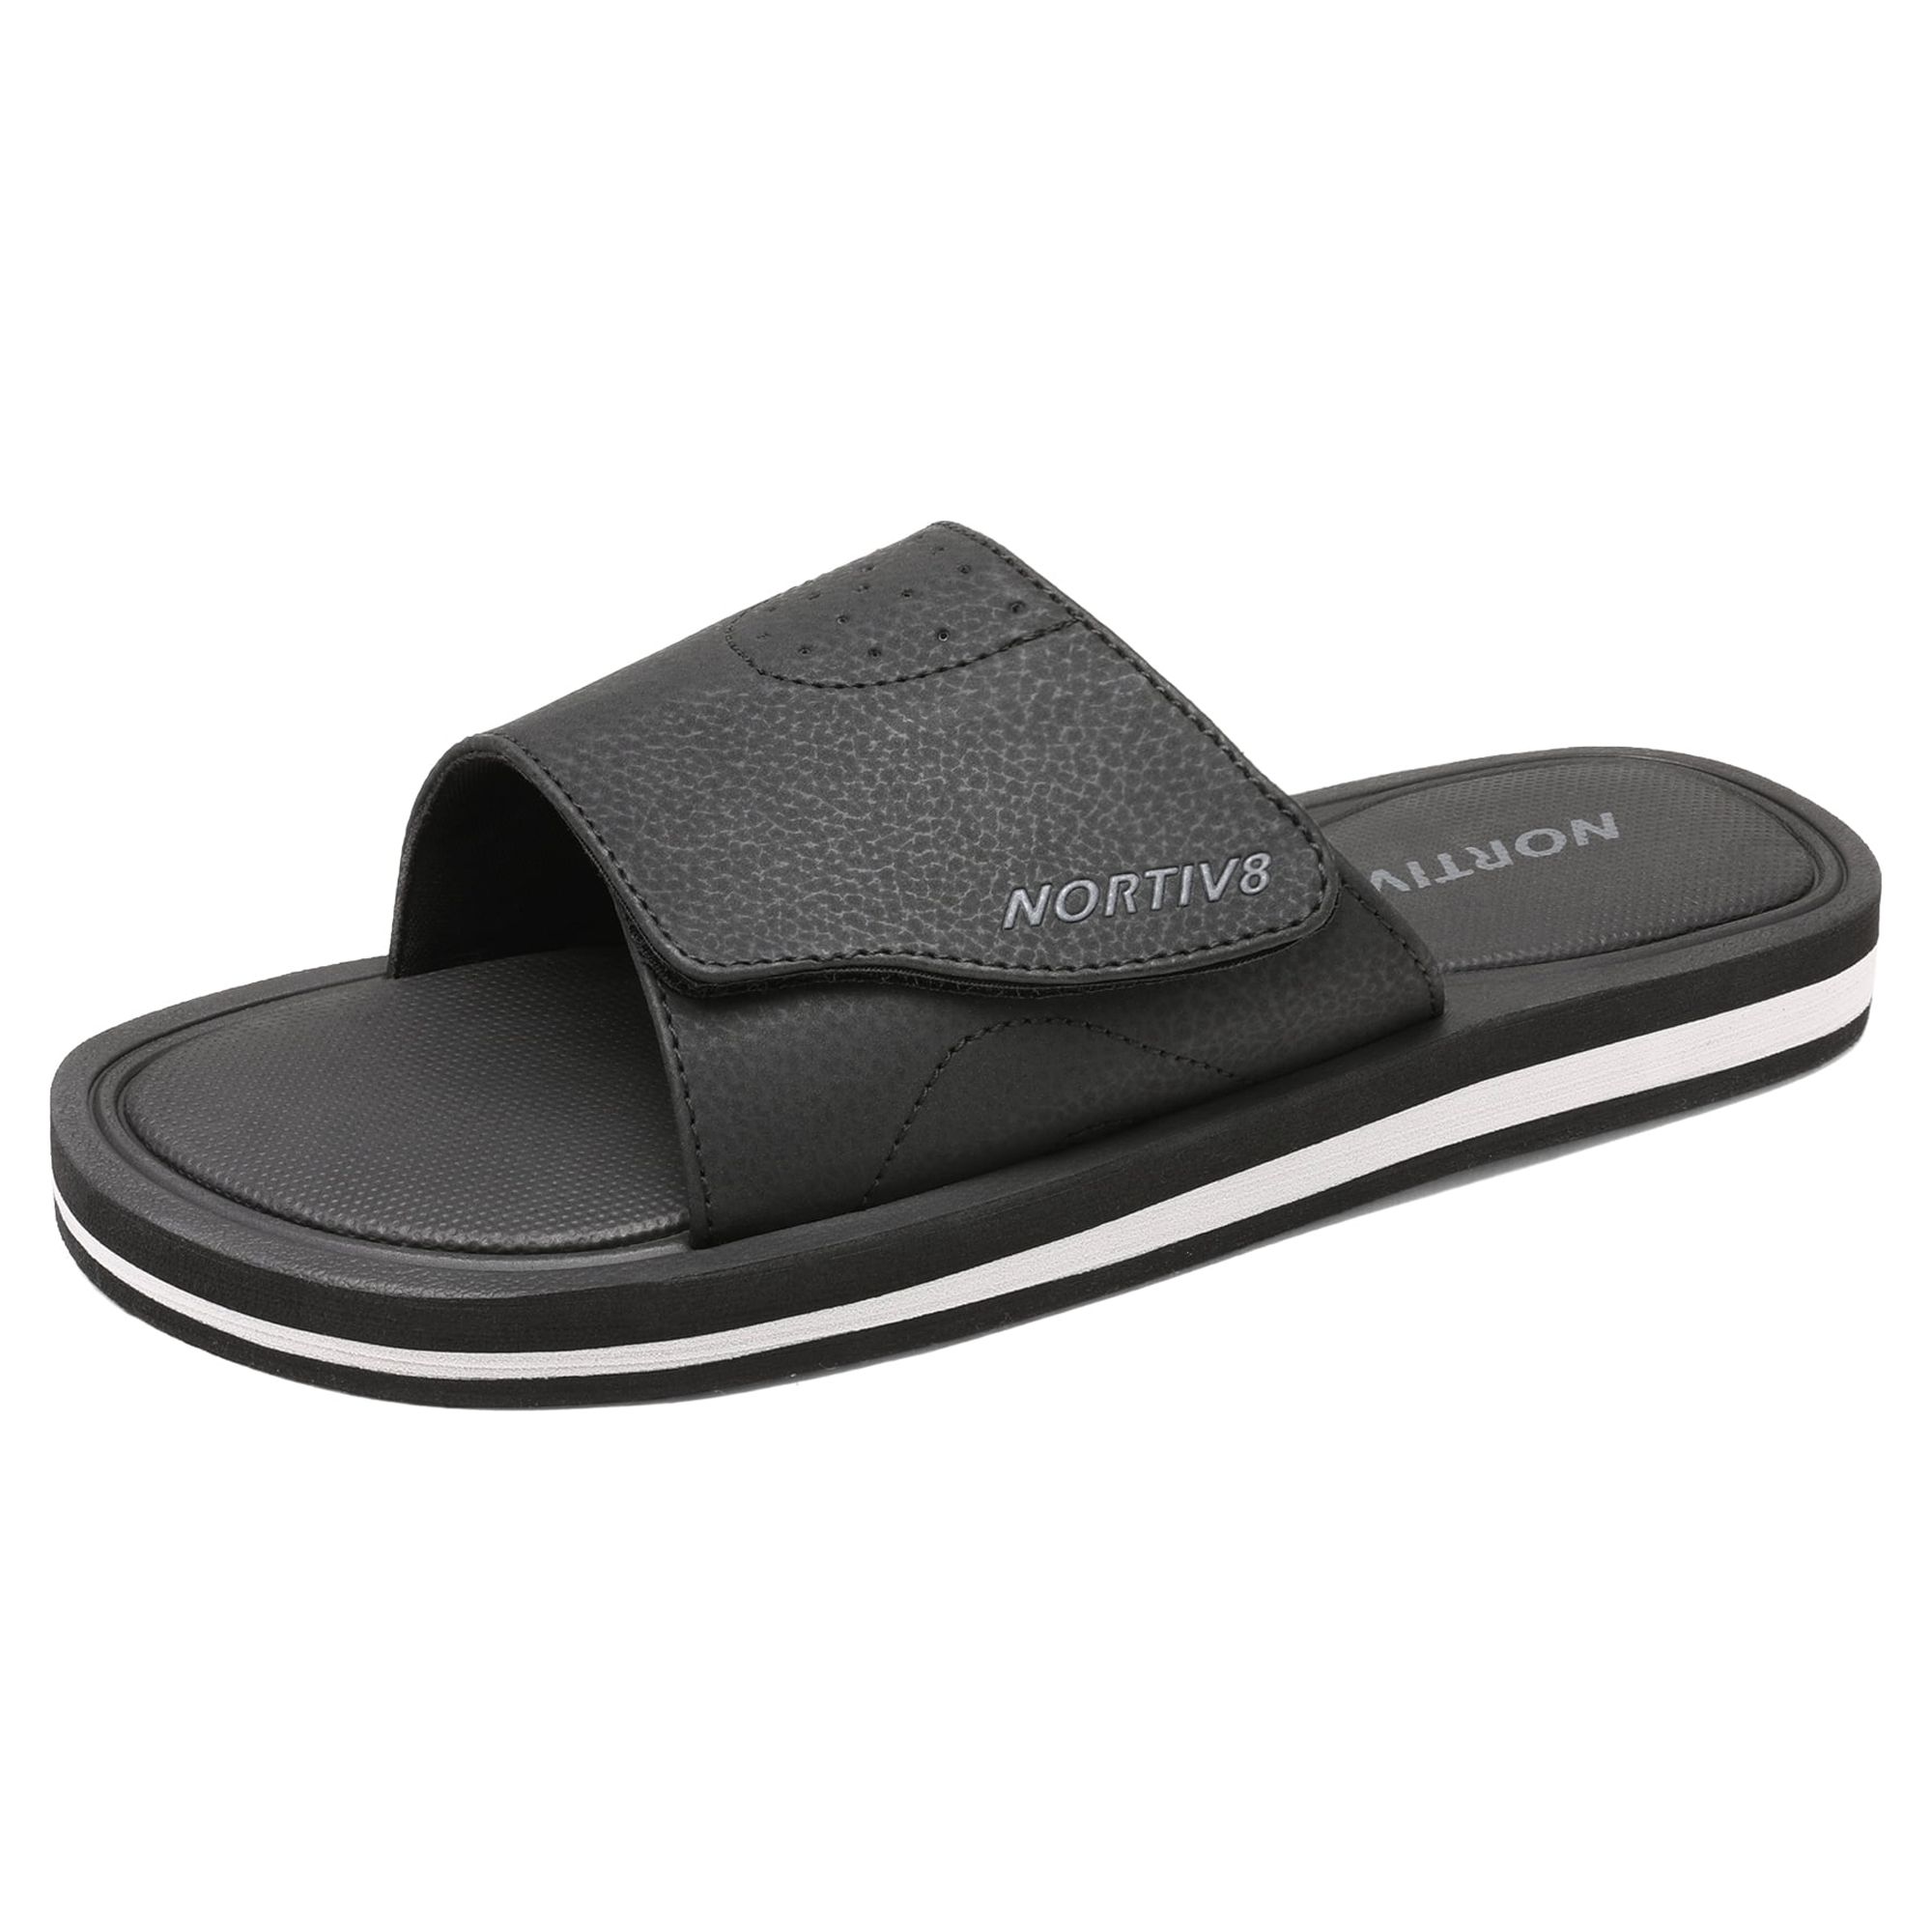 Nortiv8 Men's Memory Foam Adjustable Slide Sandals Comfort Lightweight Summer Beach Sandals Shoes FUSION BLACK Size 10 - image 1 of 5